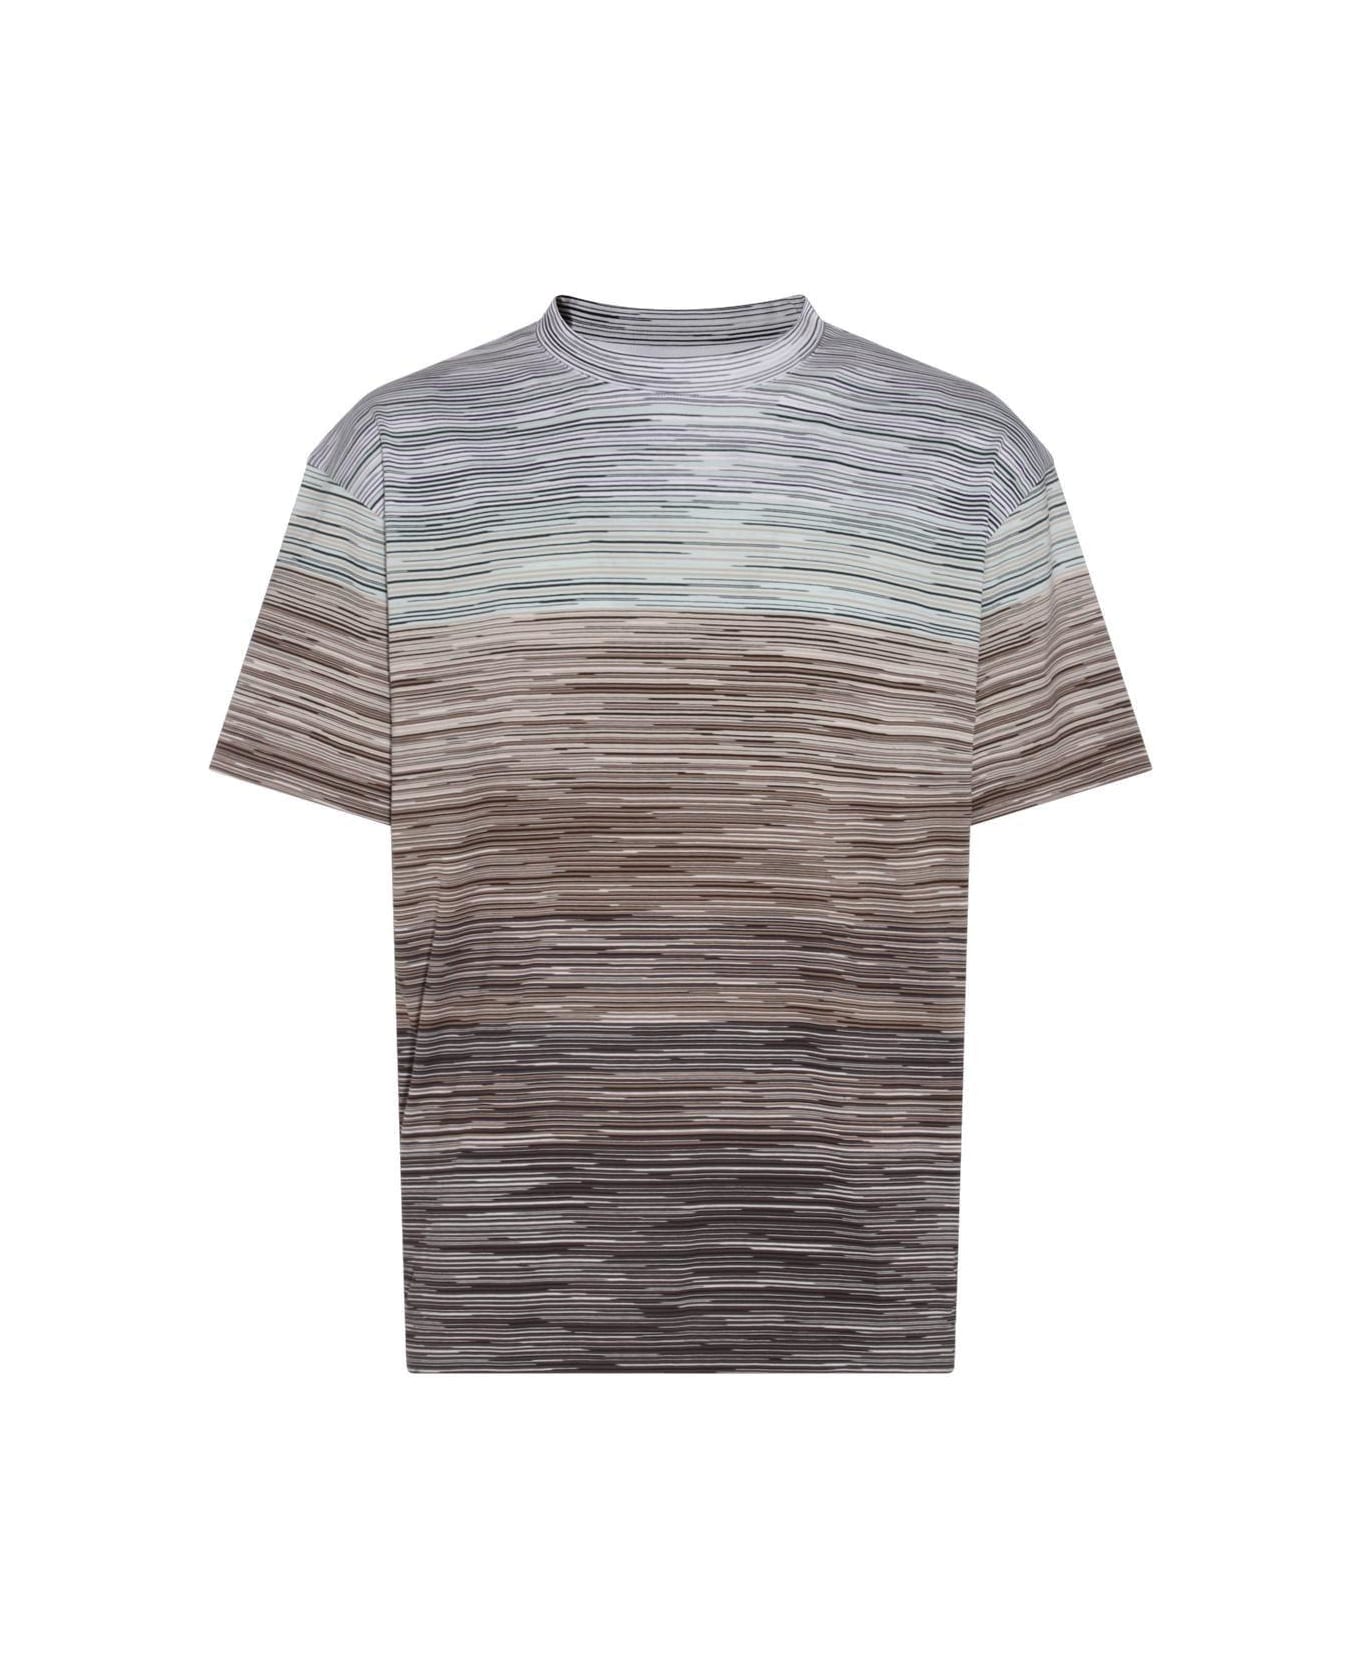 Missoni Short Sleeved Striped Crewneck T-shirt - Beige